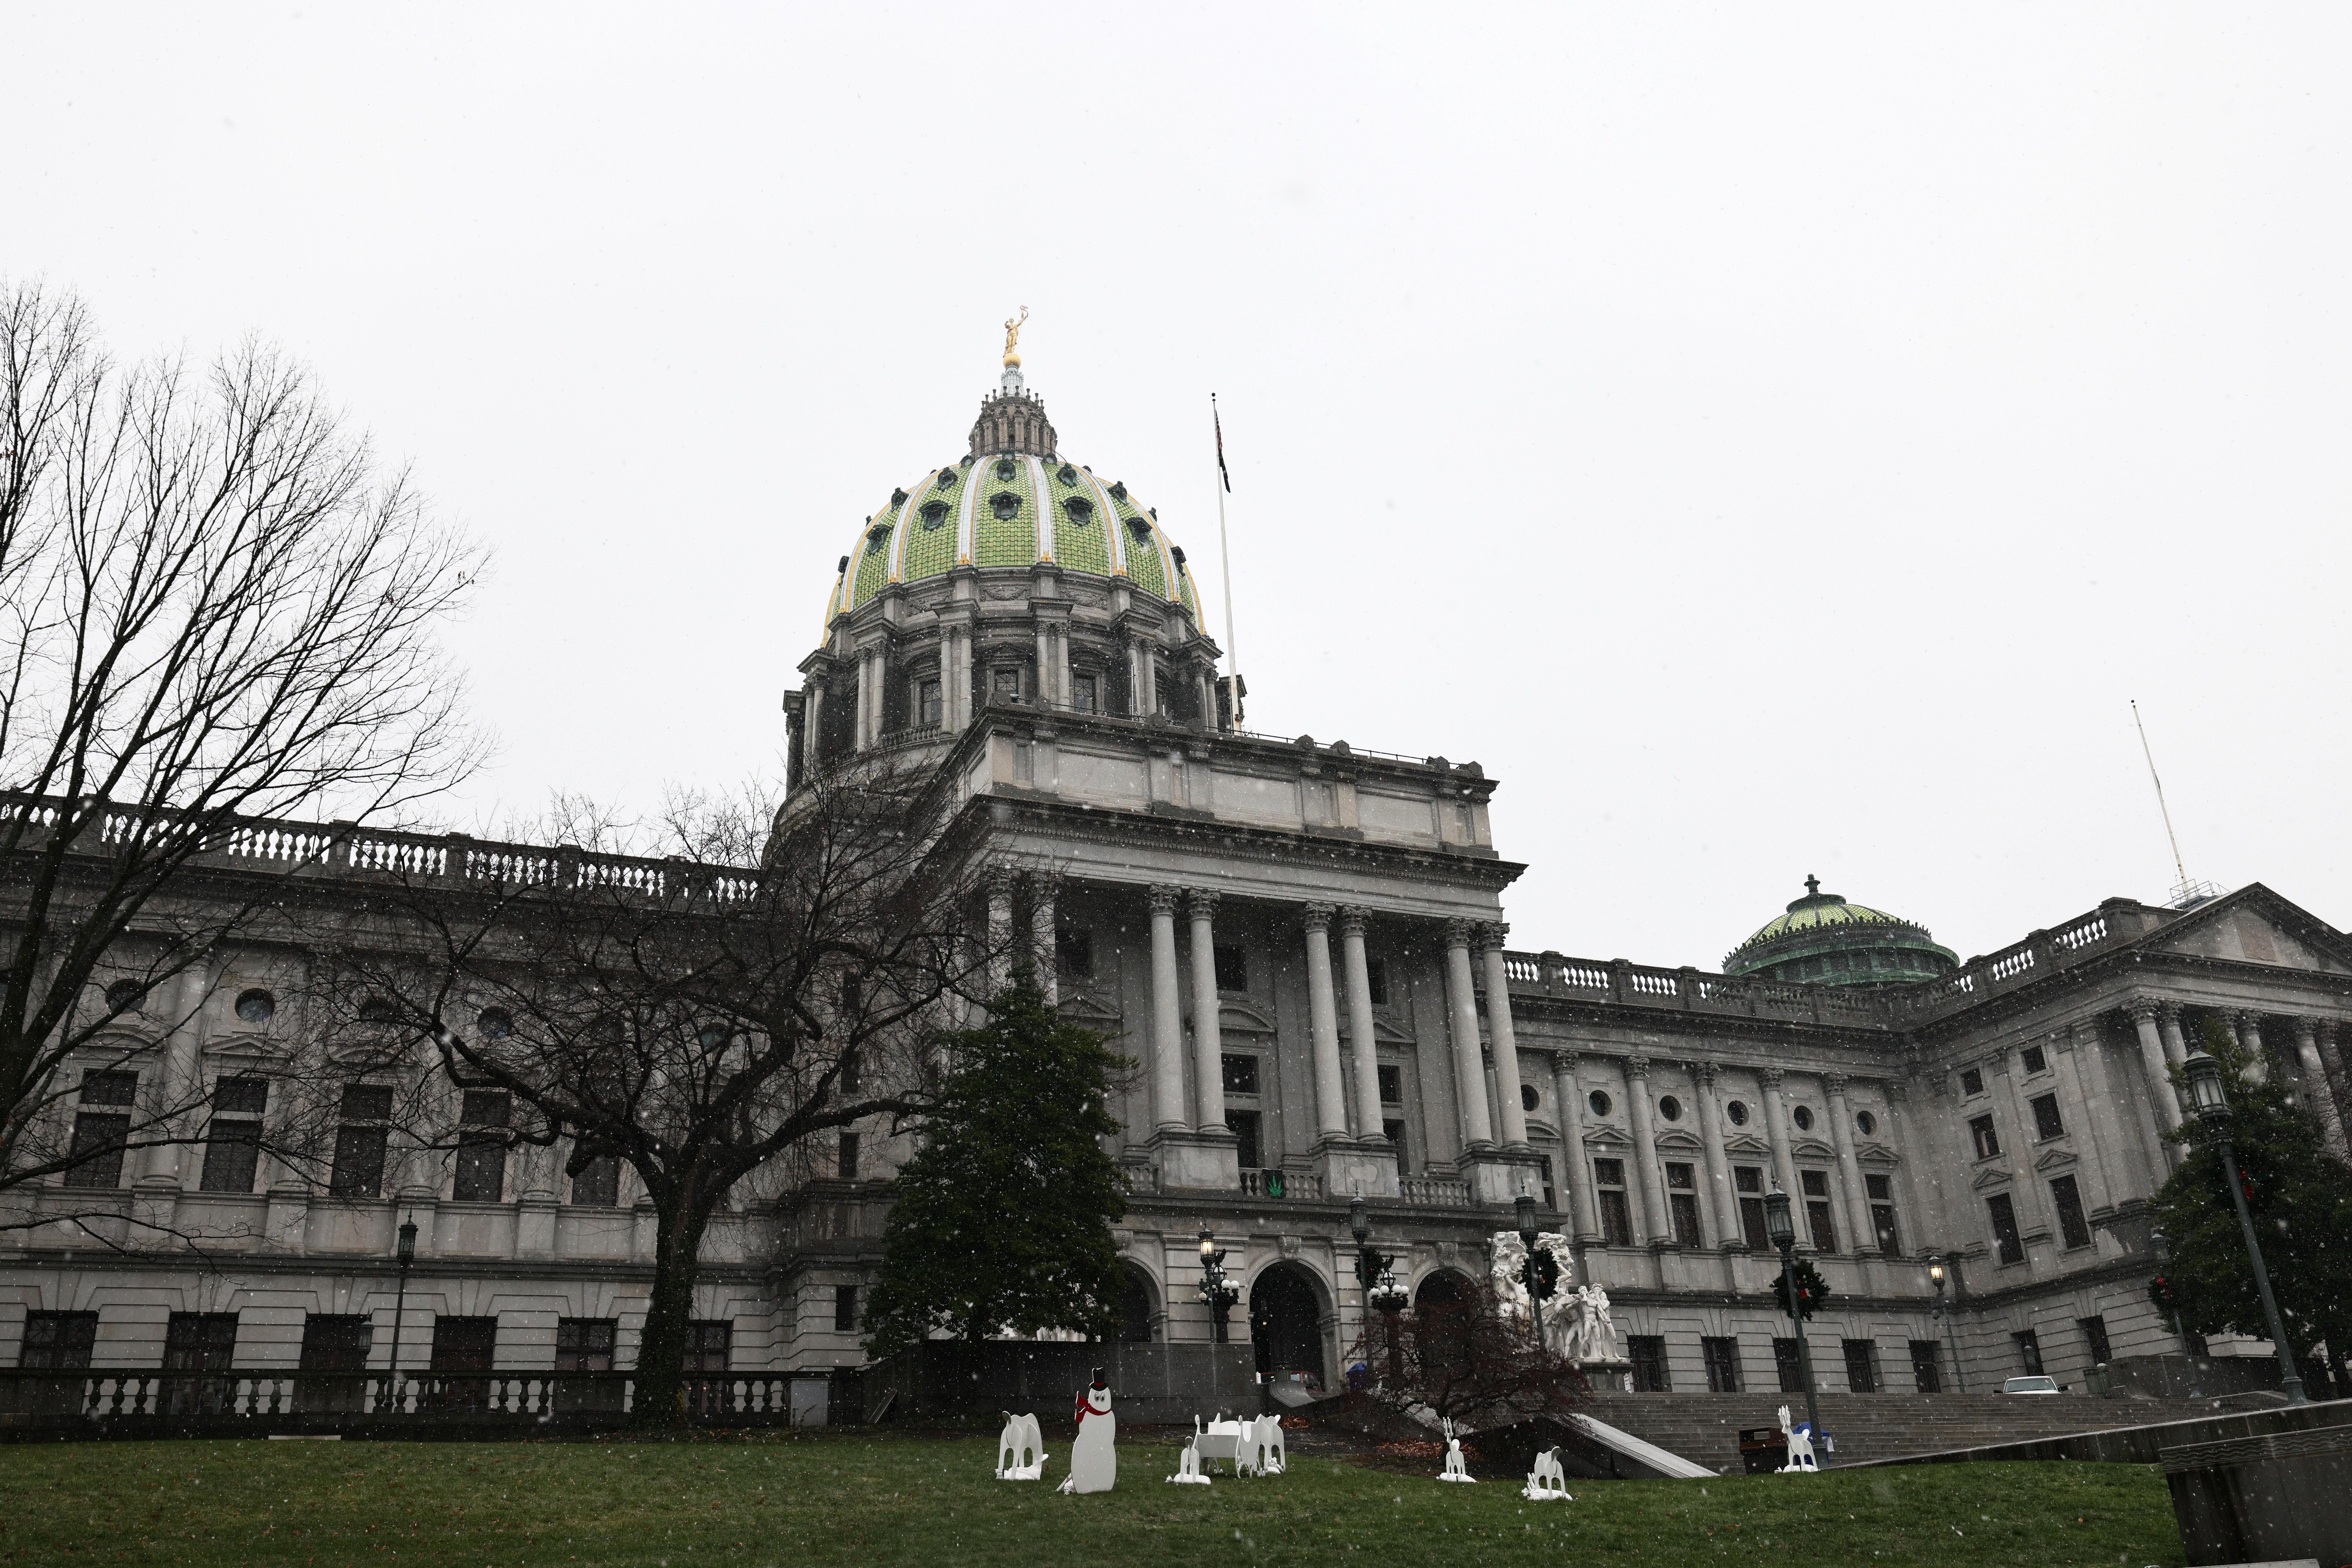 The Pennsylvania capitol building